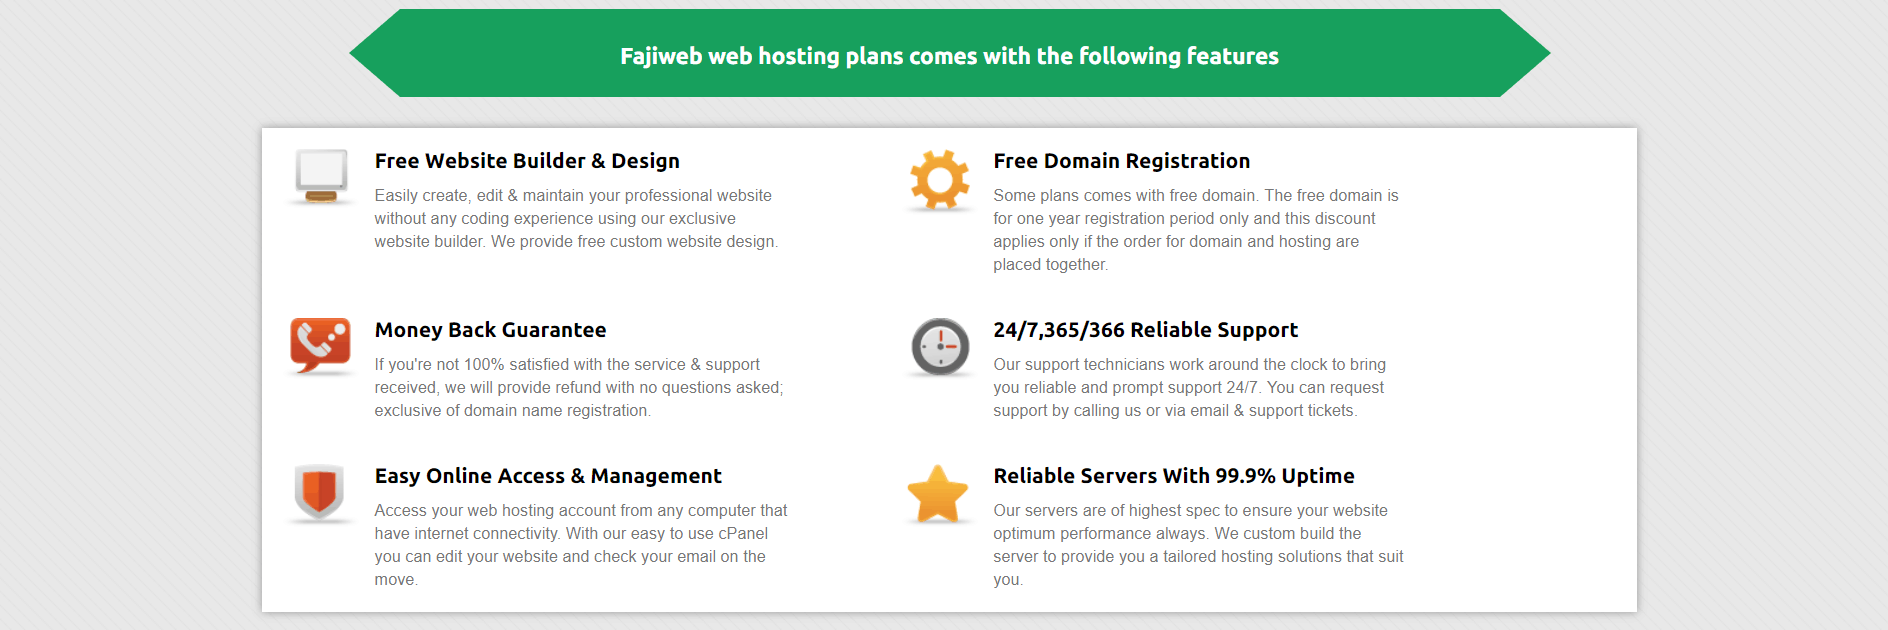 fajiweb-features